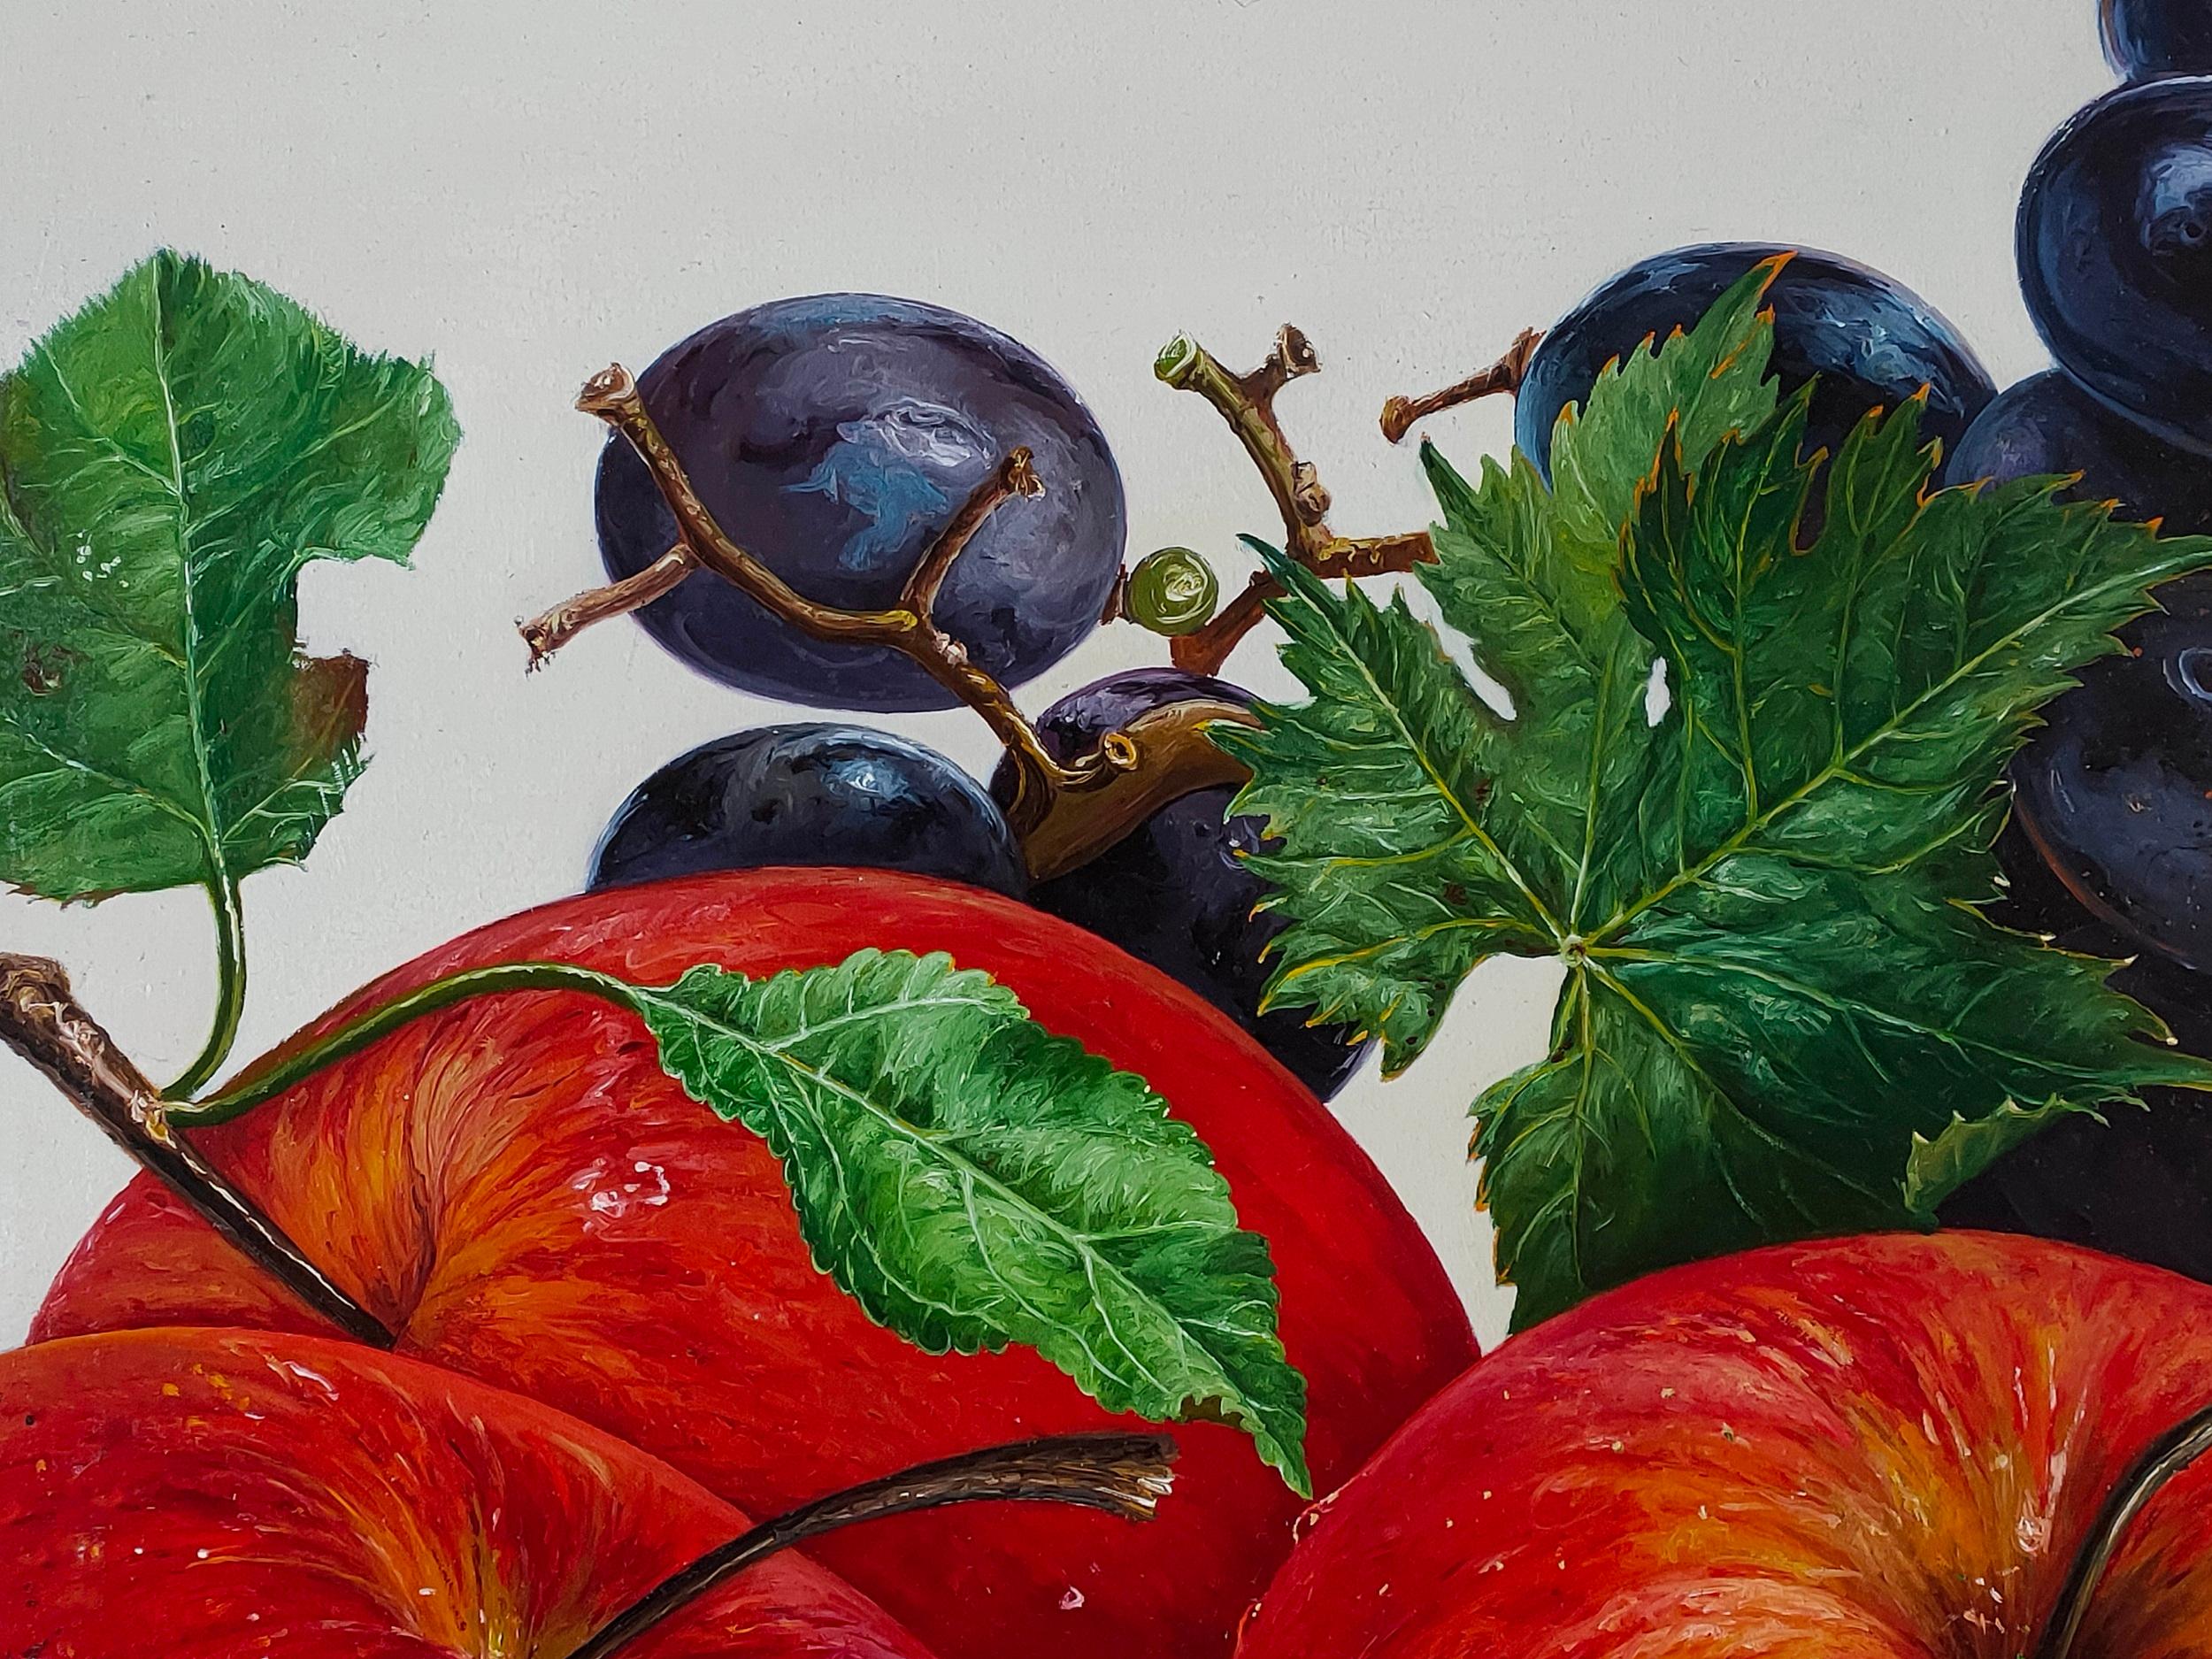 Red Apples Wooden Box - Painting by Layong Jingga Probo